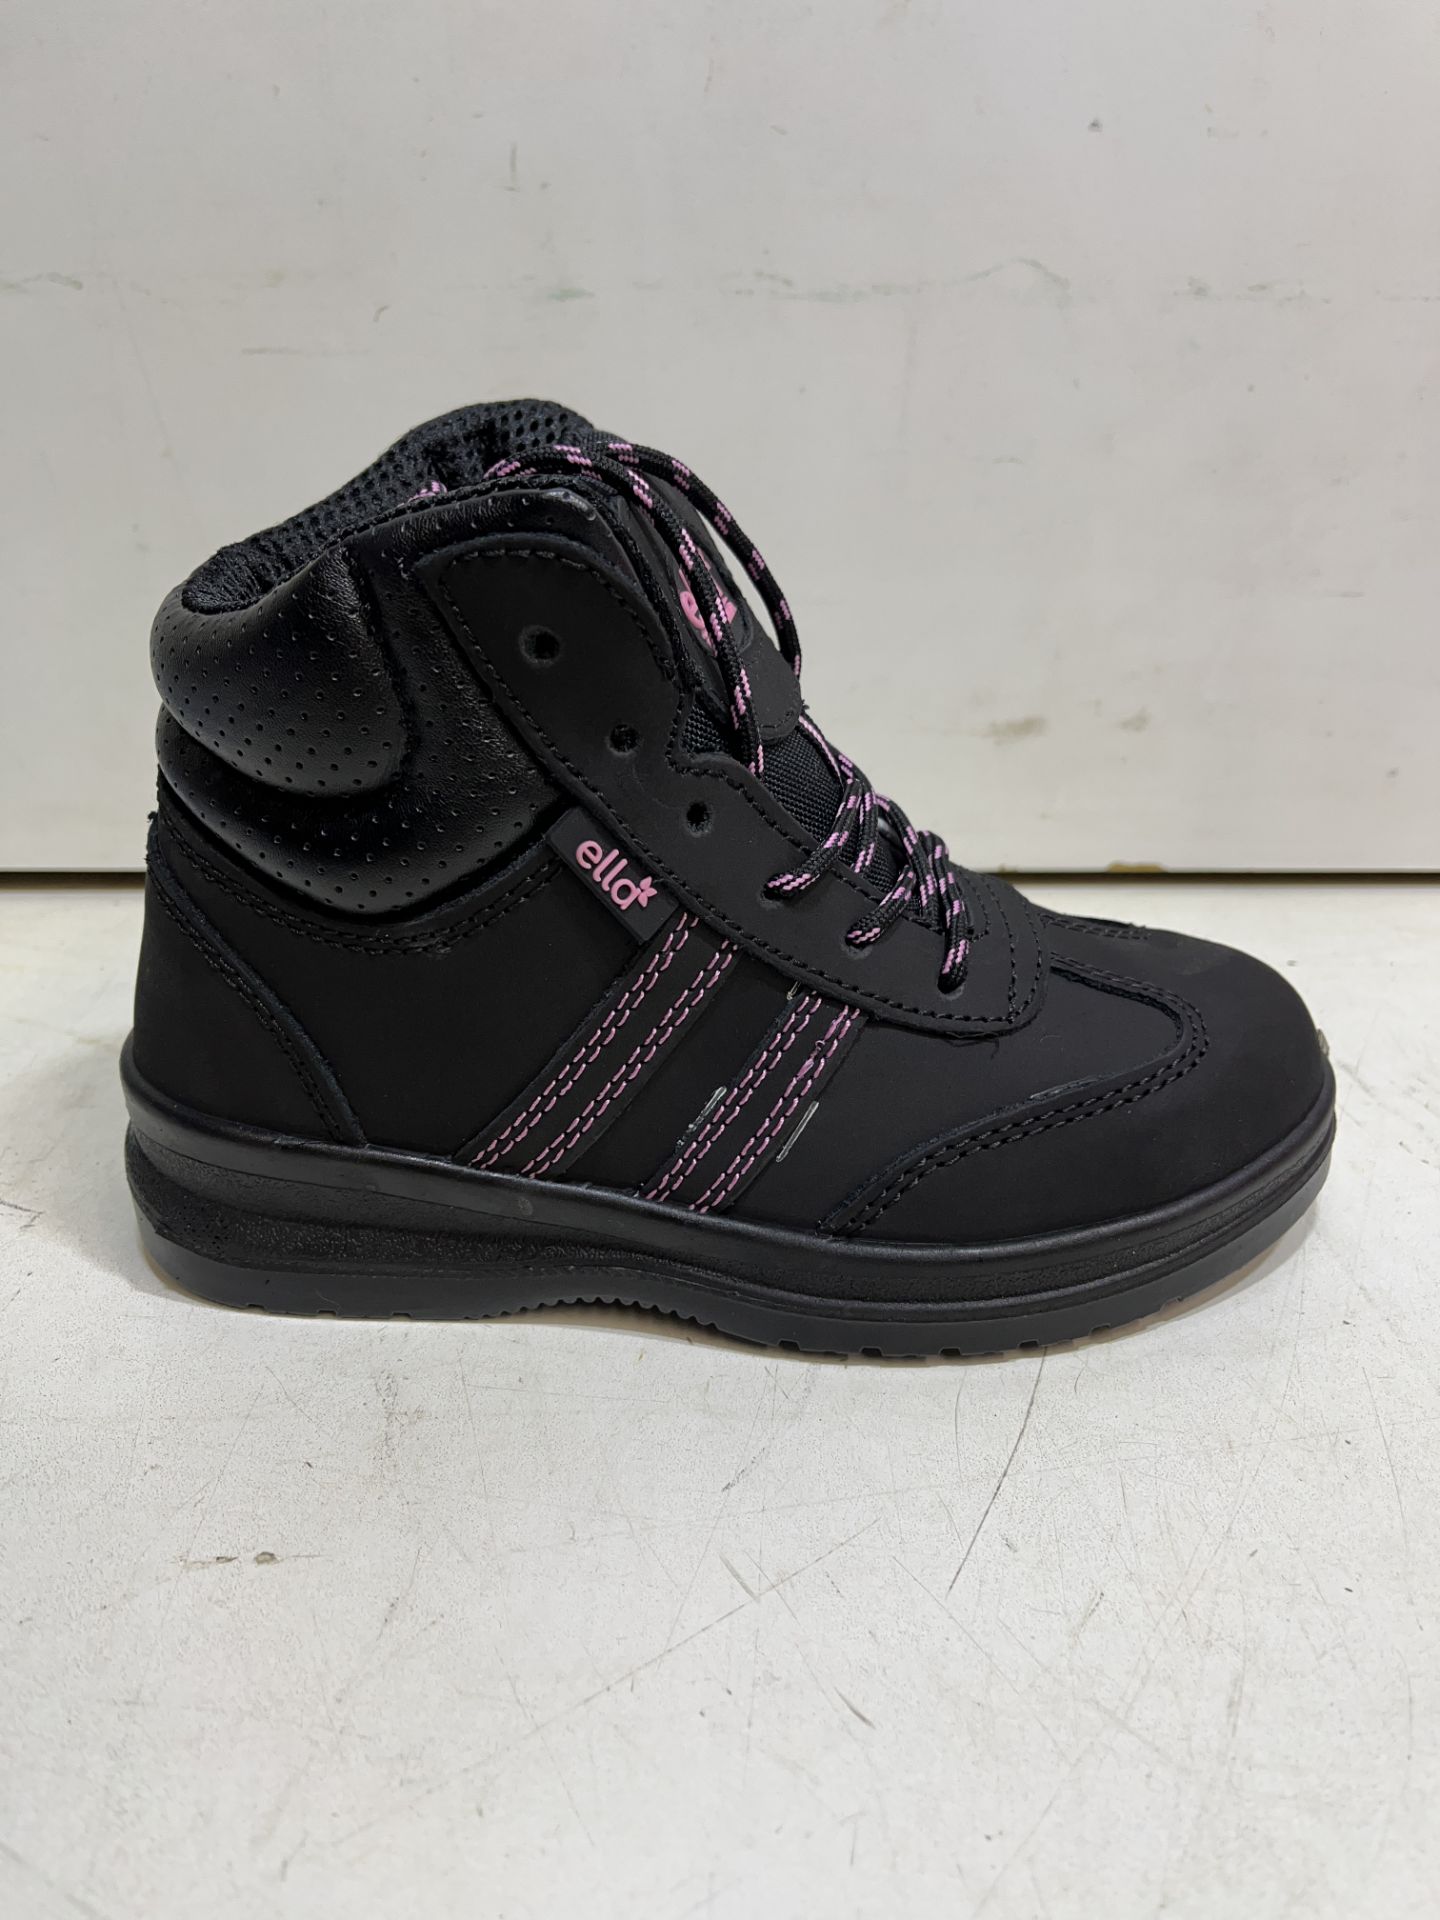 Ella Safety Boots | UK 2 - Image 2 of 4